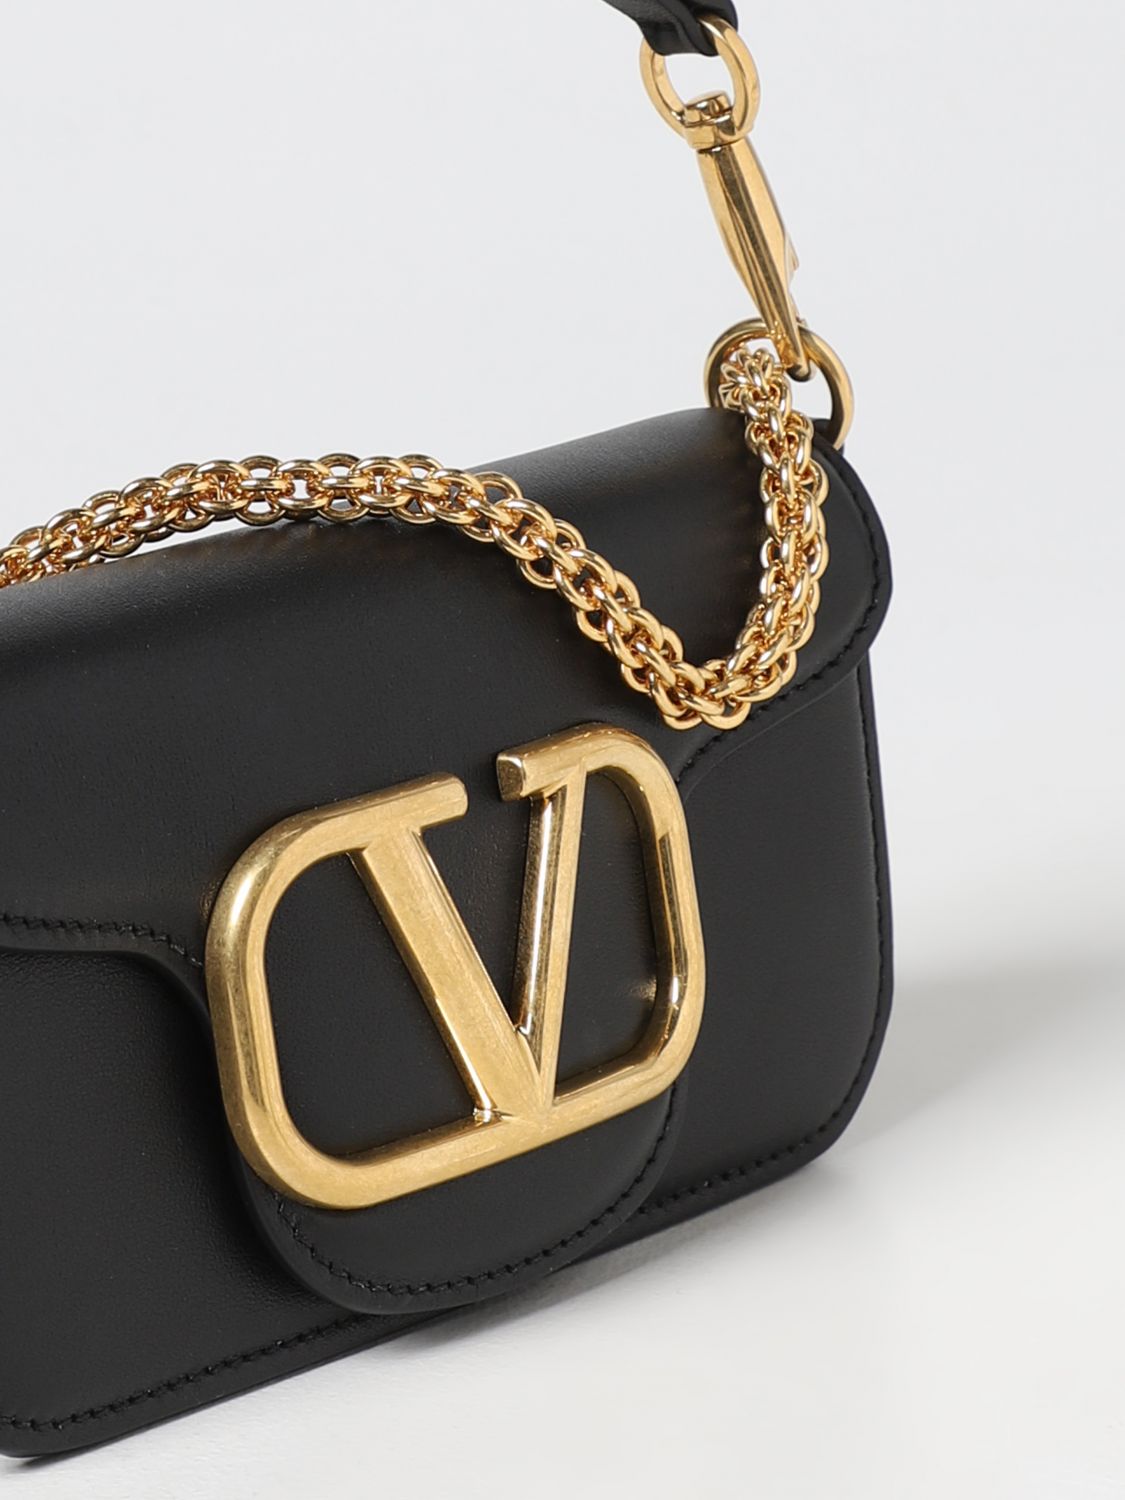 VALENTINO GARAVANI: Locò bag in smooth leather - Black  Valentino Garavani  mini bag 2W0B0K53ZXL online at